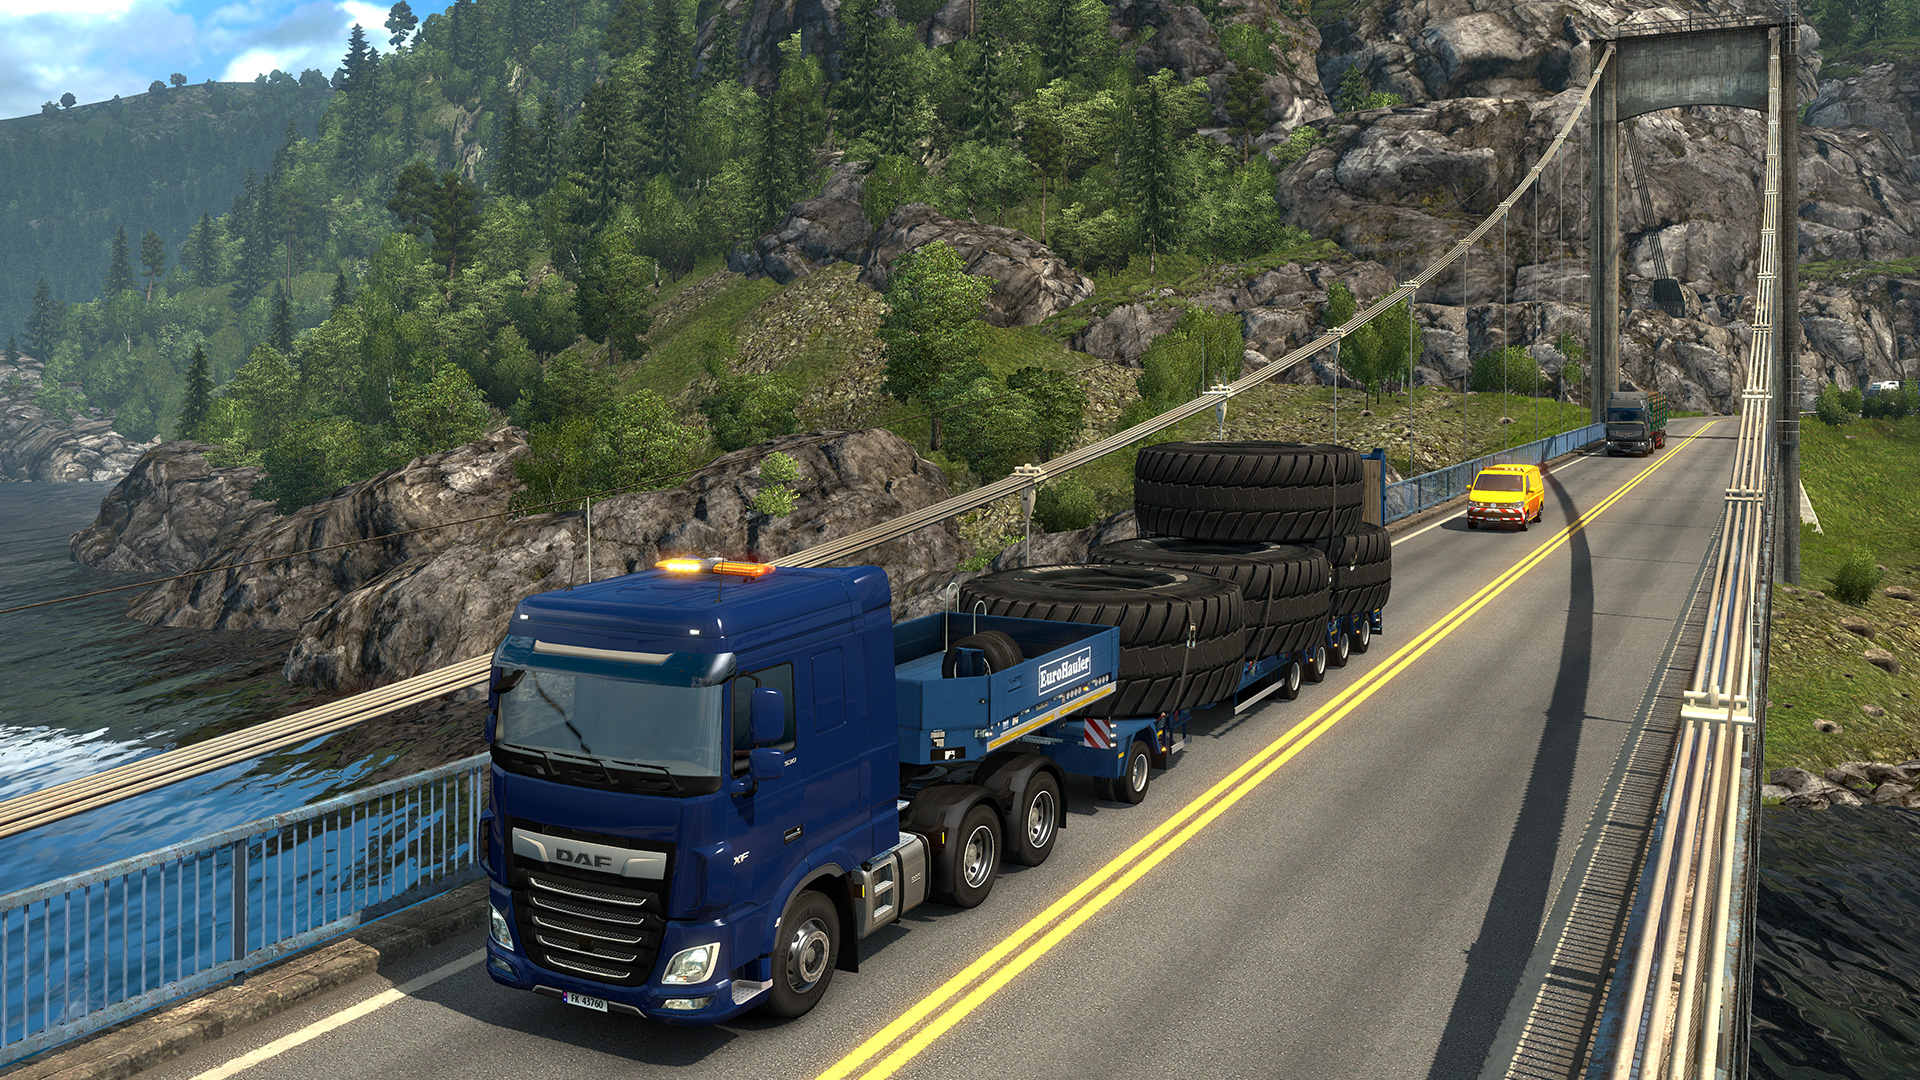 euro truck simulator 2 free